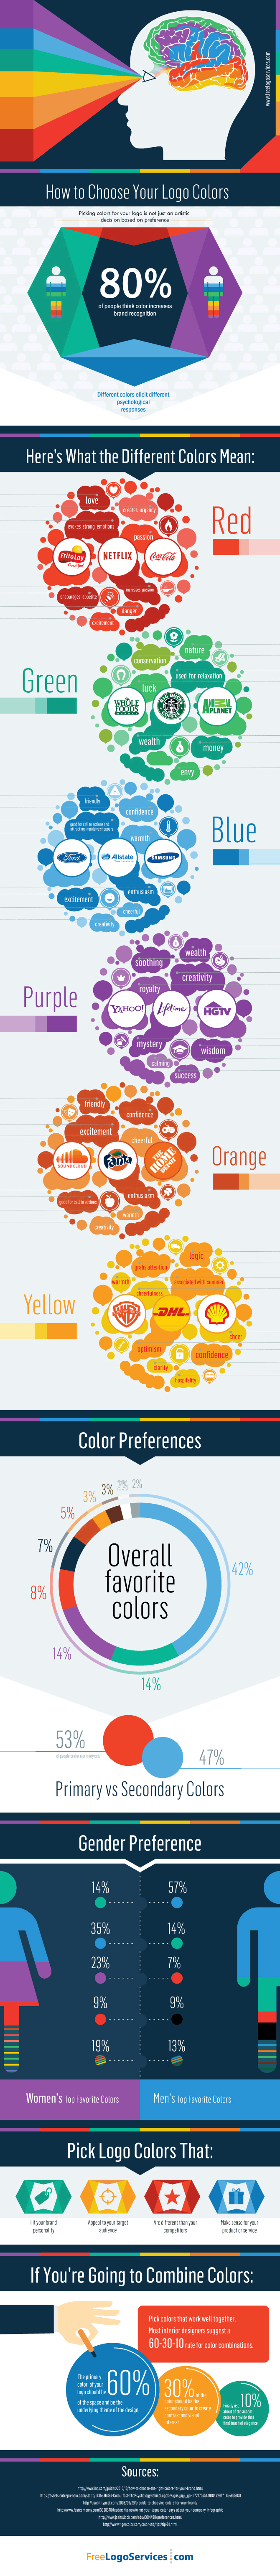 logo-design-best-color-scheme-psychology-combo-infographic